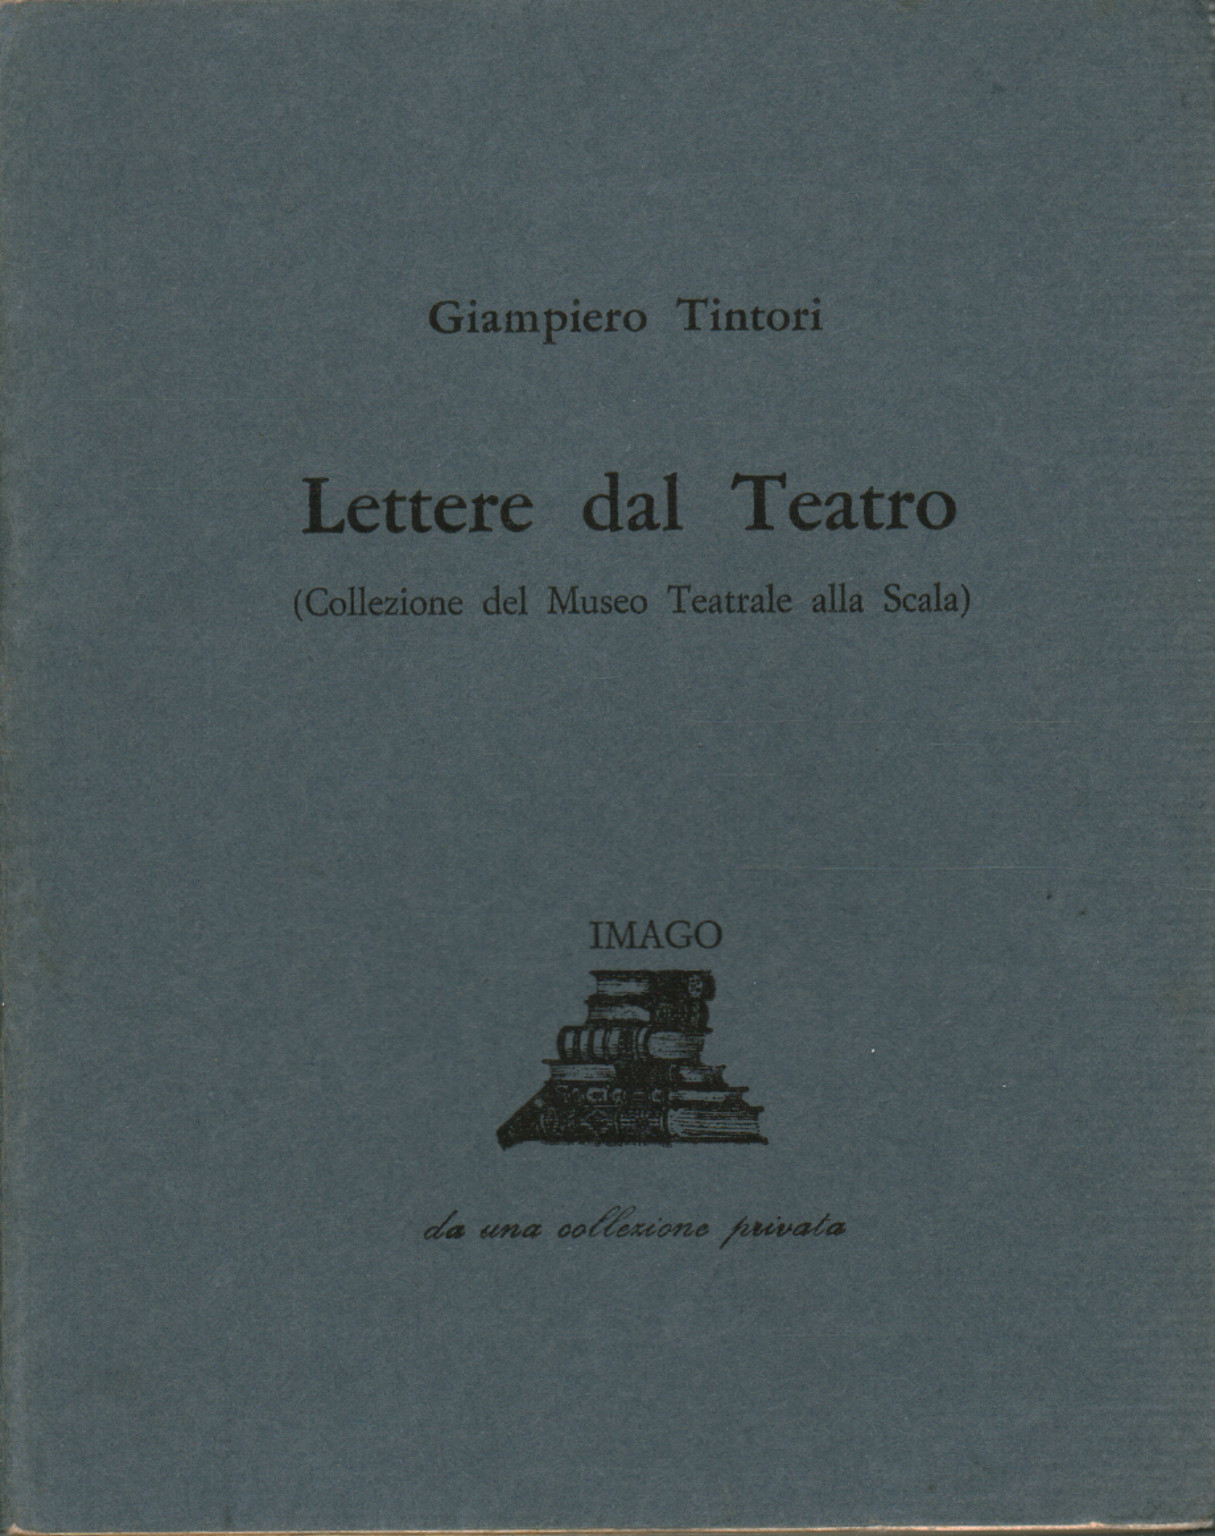 Lettere dal Teatro, s.a.